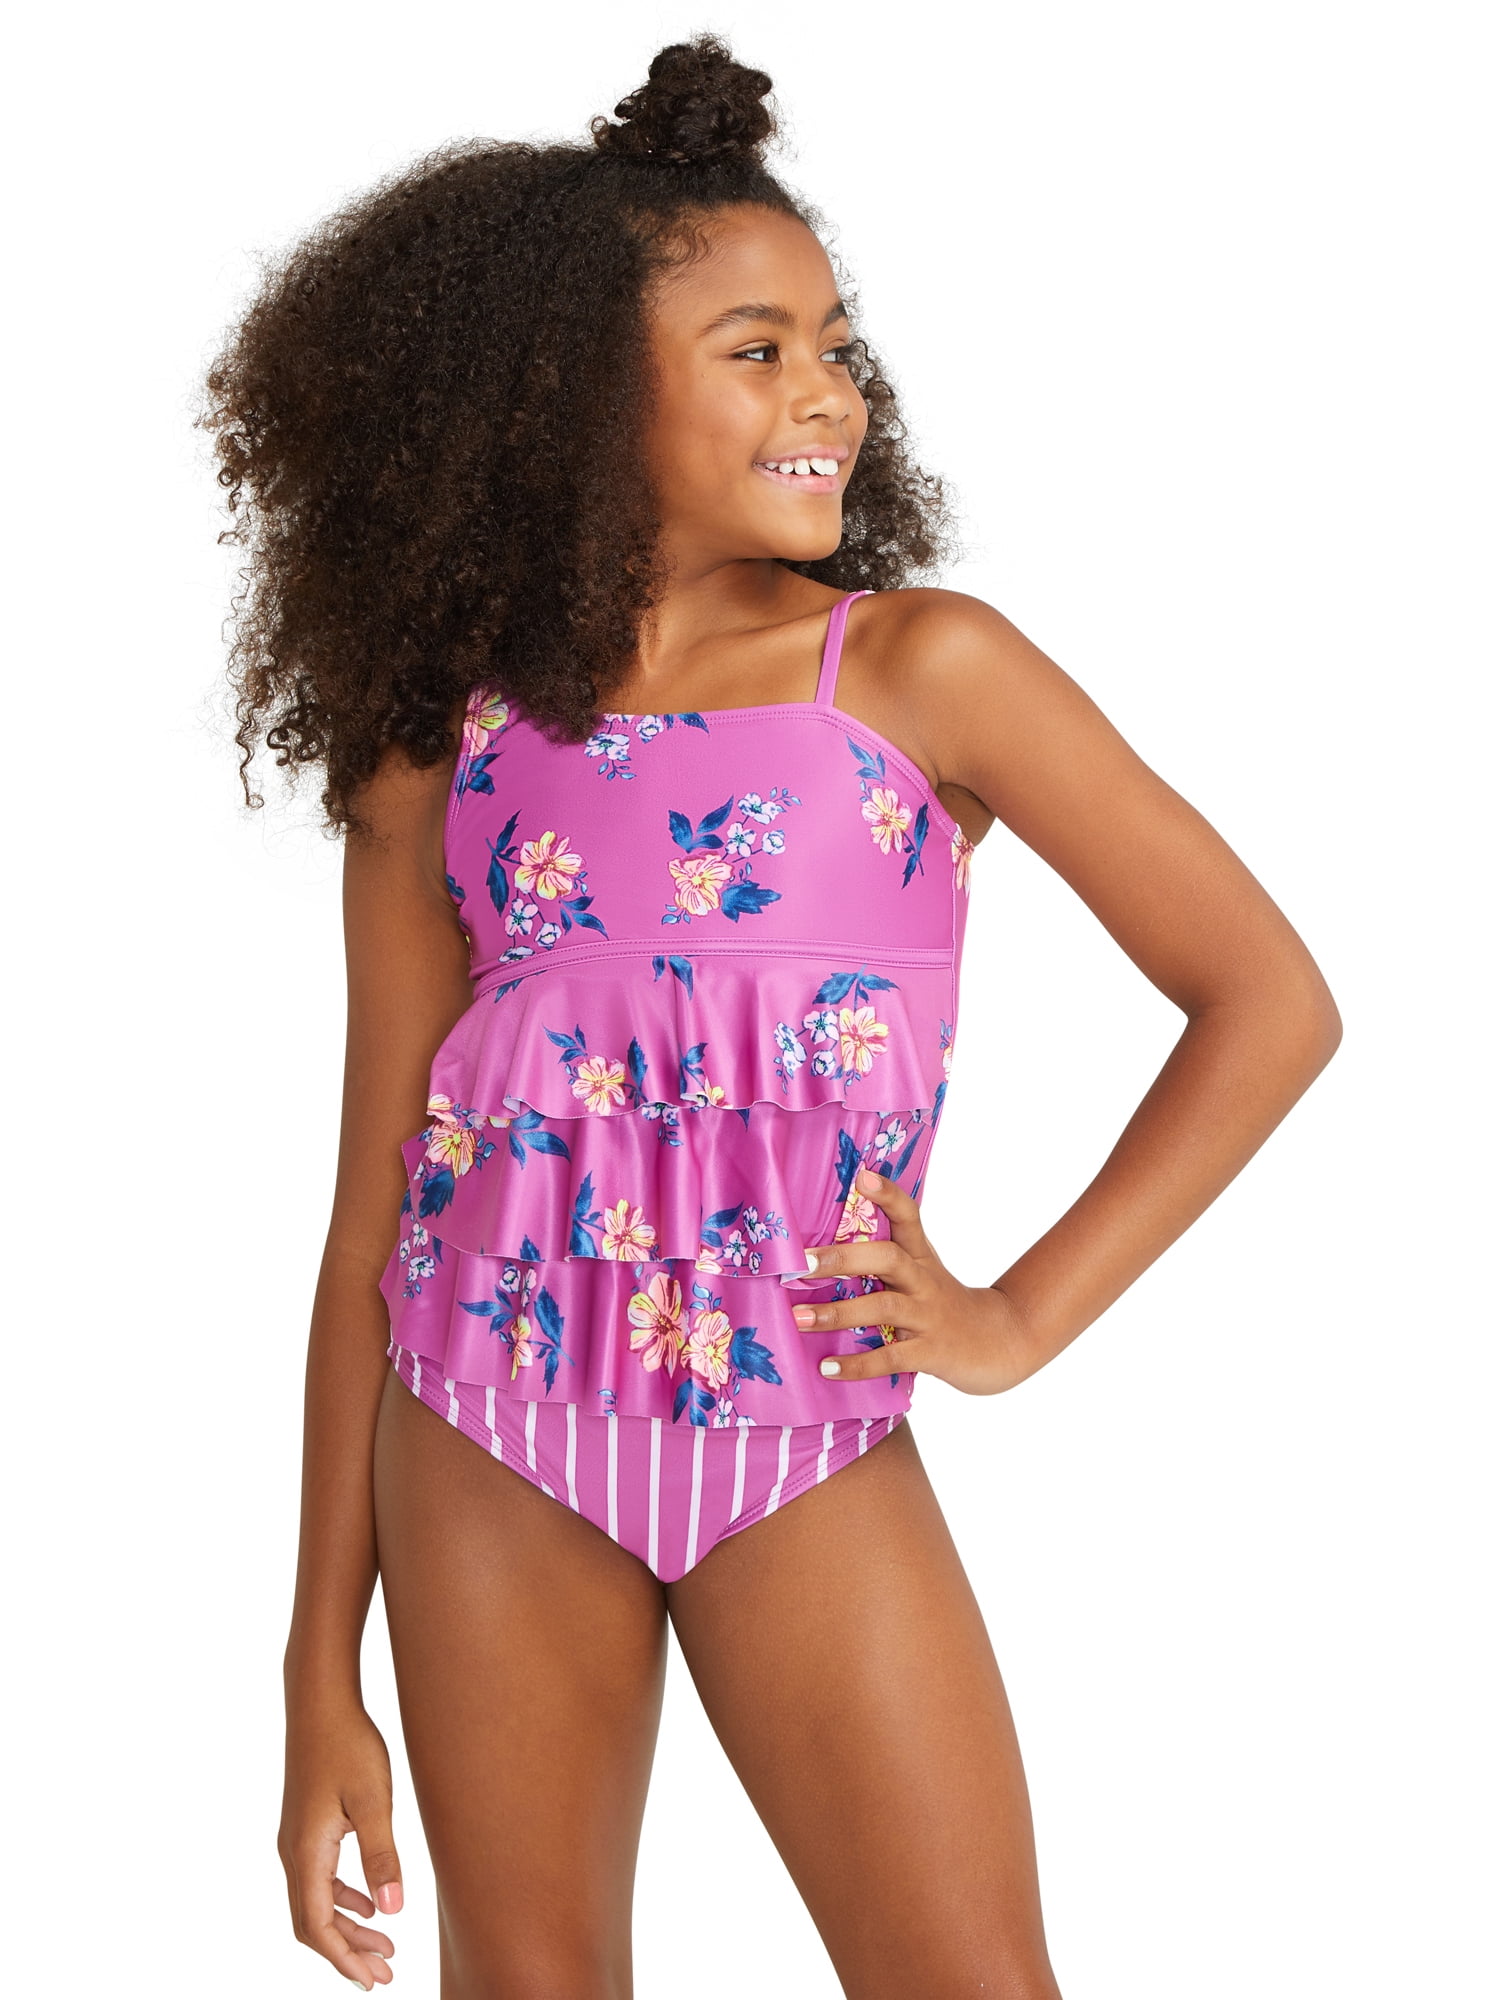 6 5 Bathing Suit 12 8 10 Dance Leotard Swim suit 14 6X MERMAID 7 Swimwear Girls One-piece Swimsuit Gift for Grand-daughter